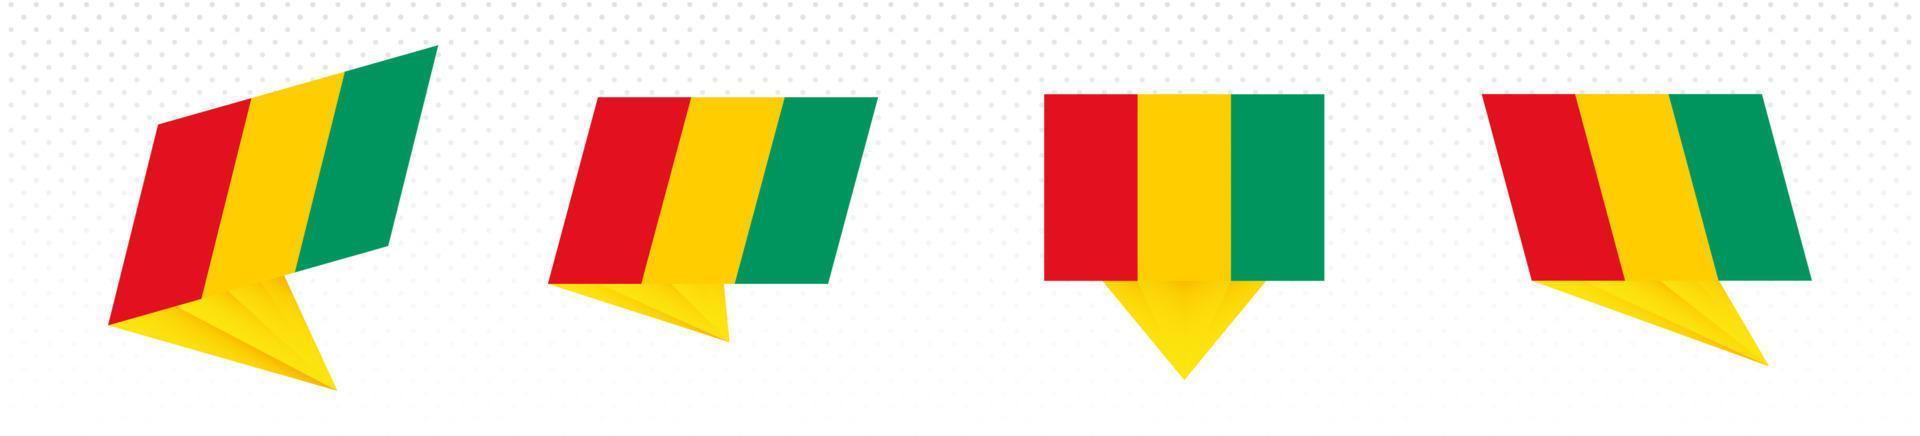 vlag van Guinea in modern abstract ontwerp, vlag set. vector